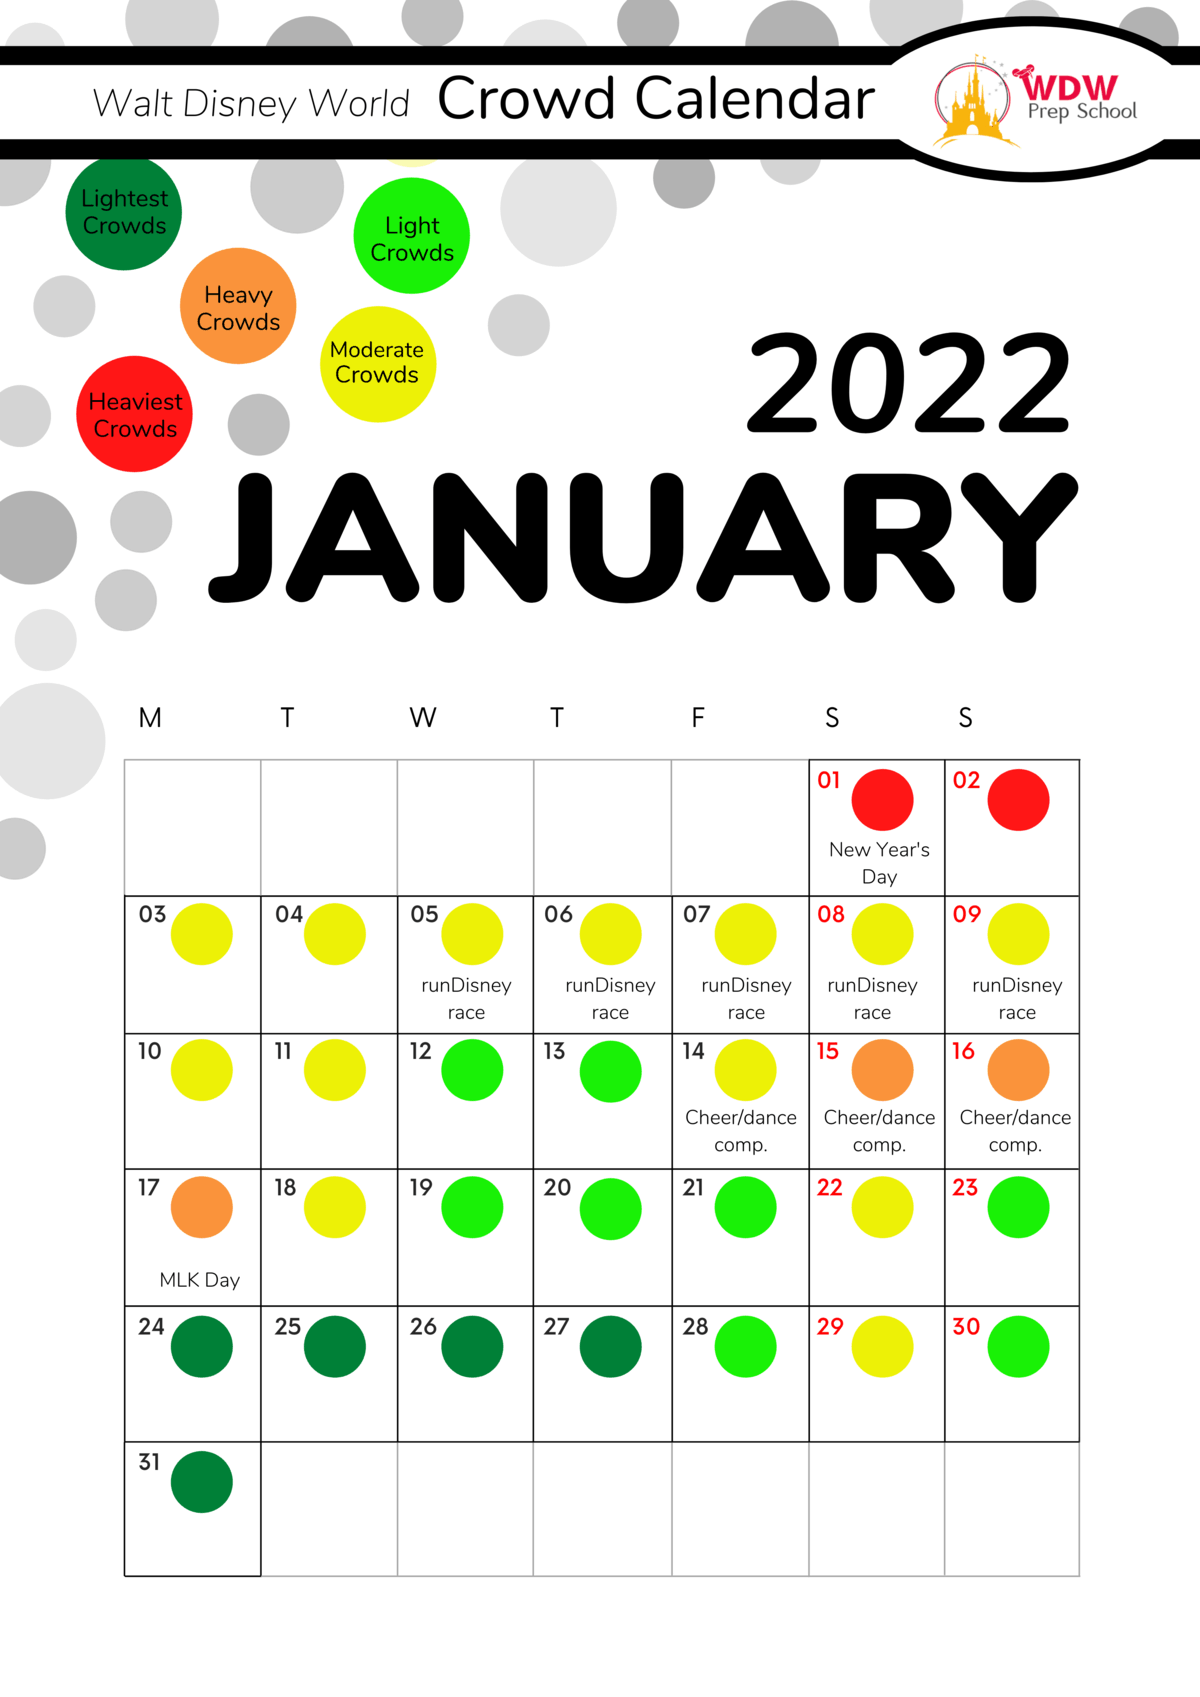 Disney World Busy Calendar 2022 Disney World 2022 Crowd Calendar (Best Times To Go)